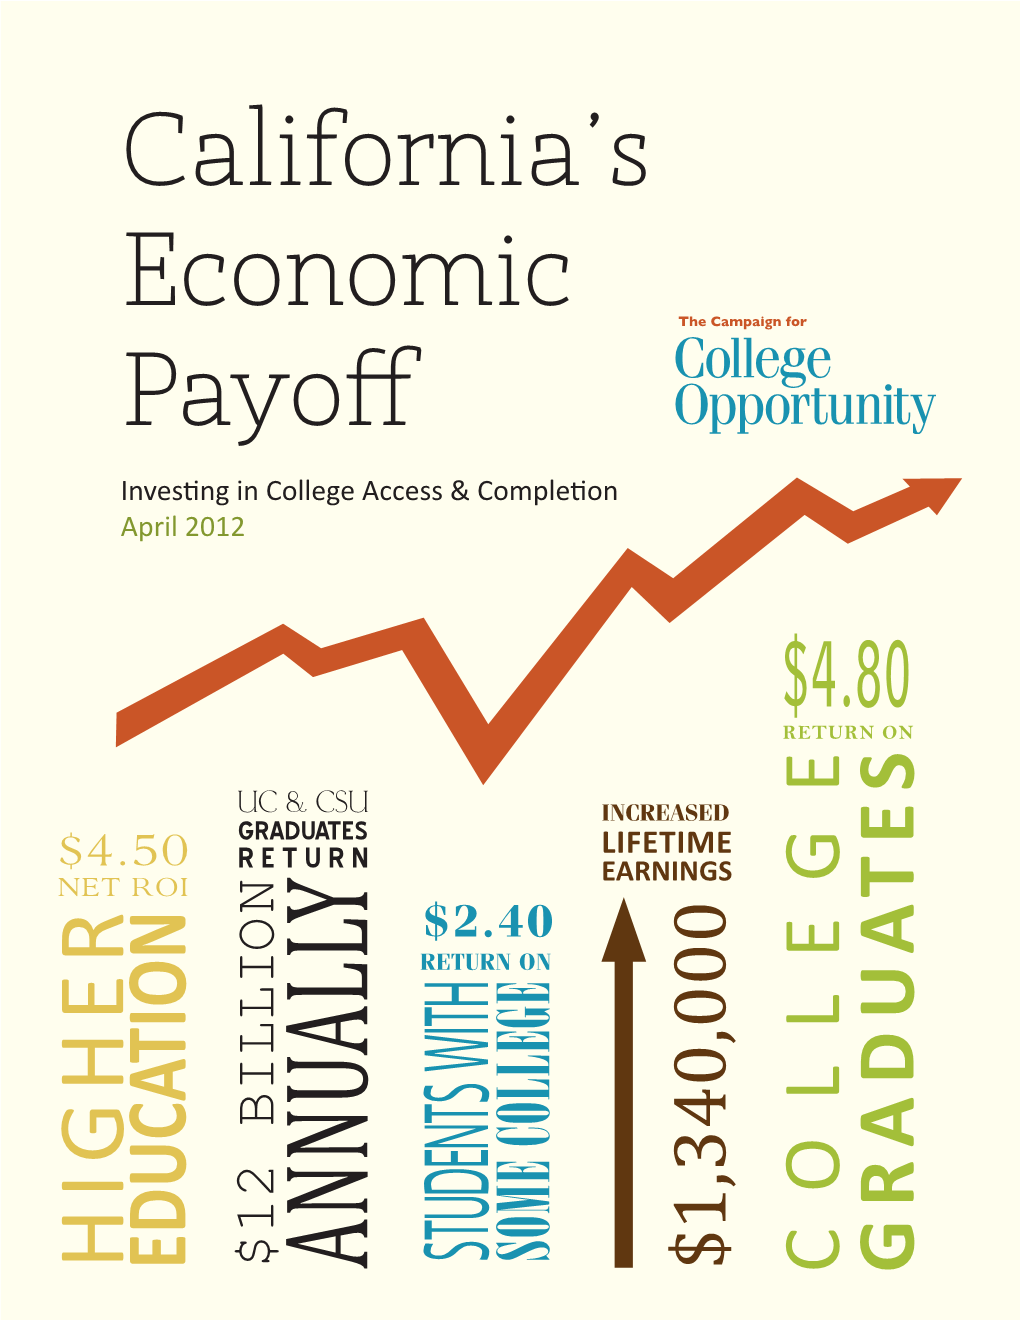 California's Economic Payoff